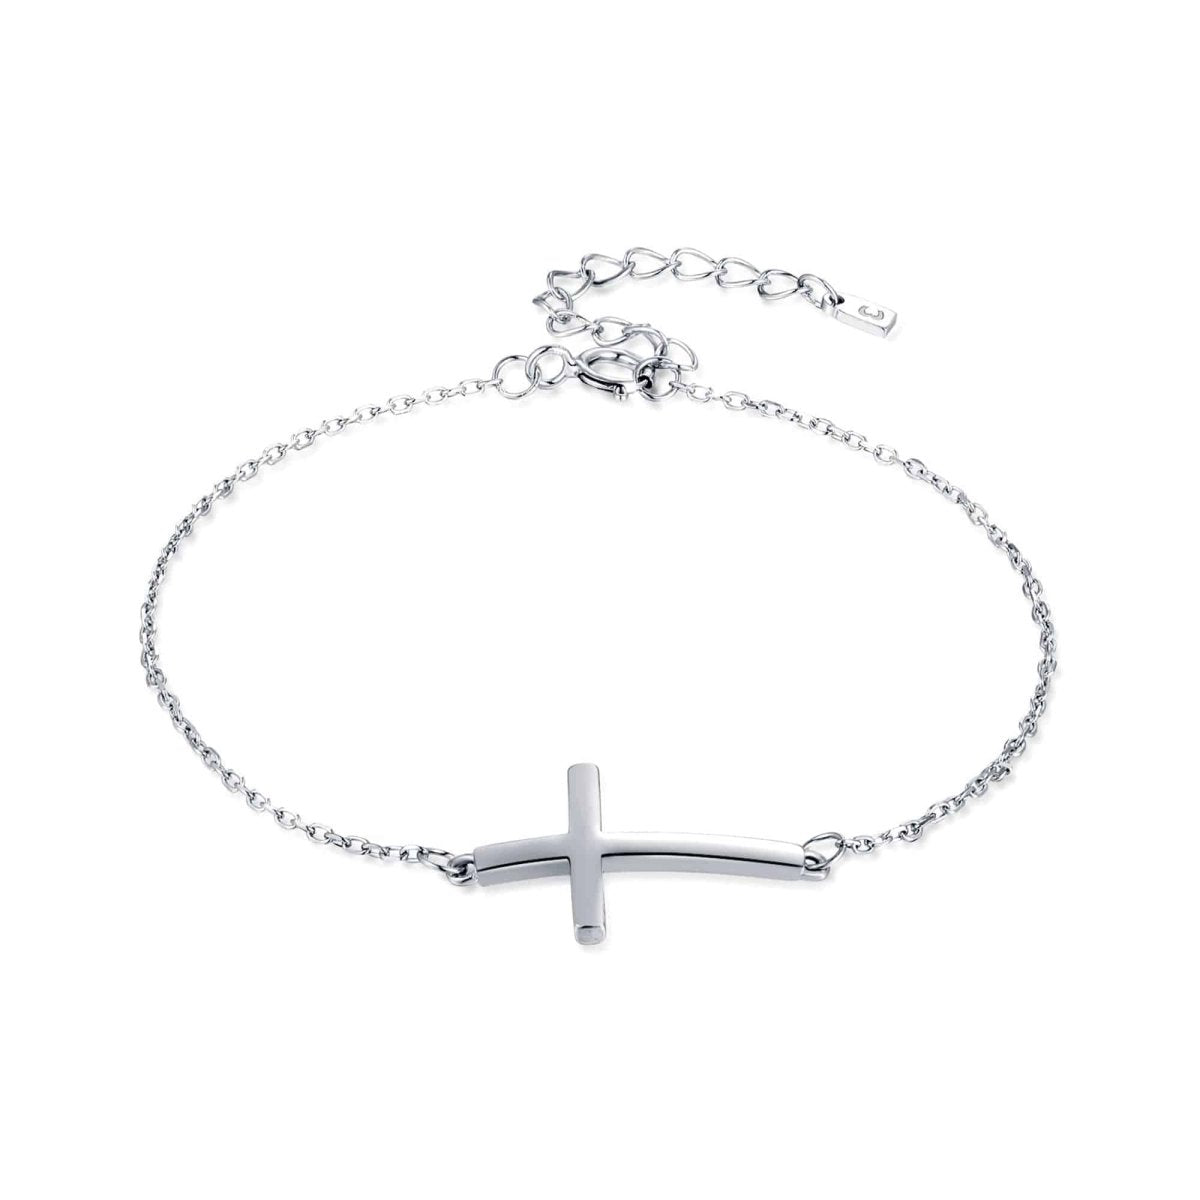 Buy Christian Bracelets for Women – Blessed Bracelet – Natural Stone  Stretch Prayer Bracelet Box - Great Gift (Brown/Beige) at Amazon.in